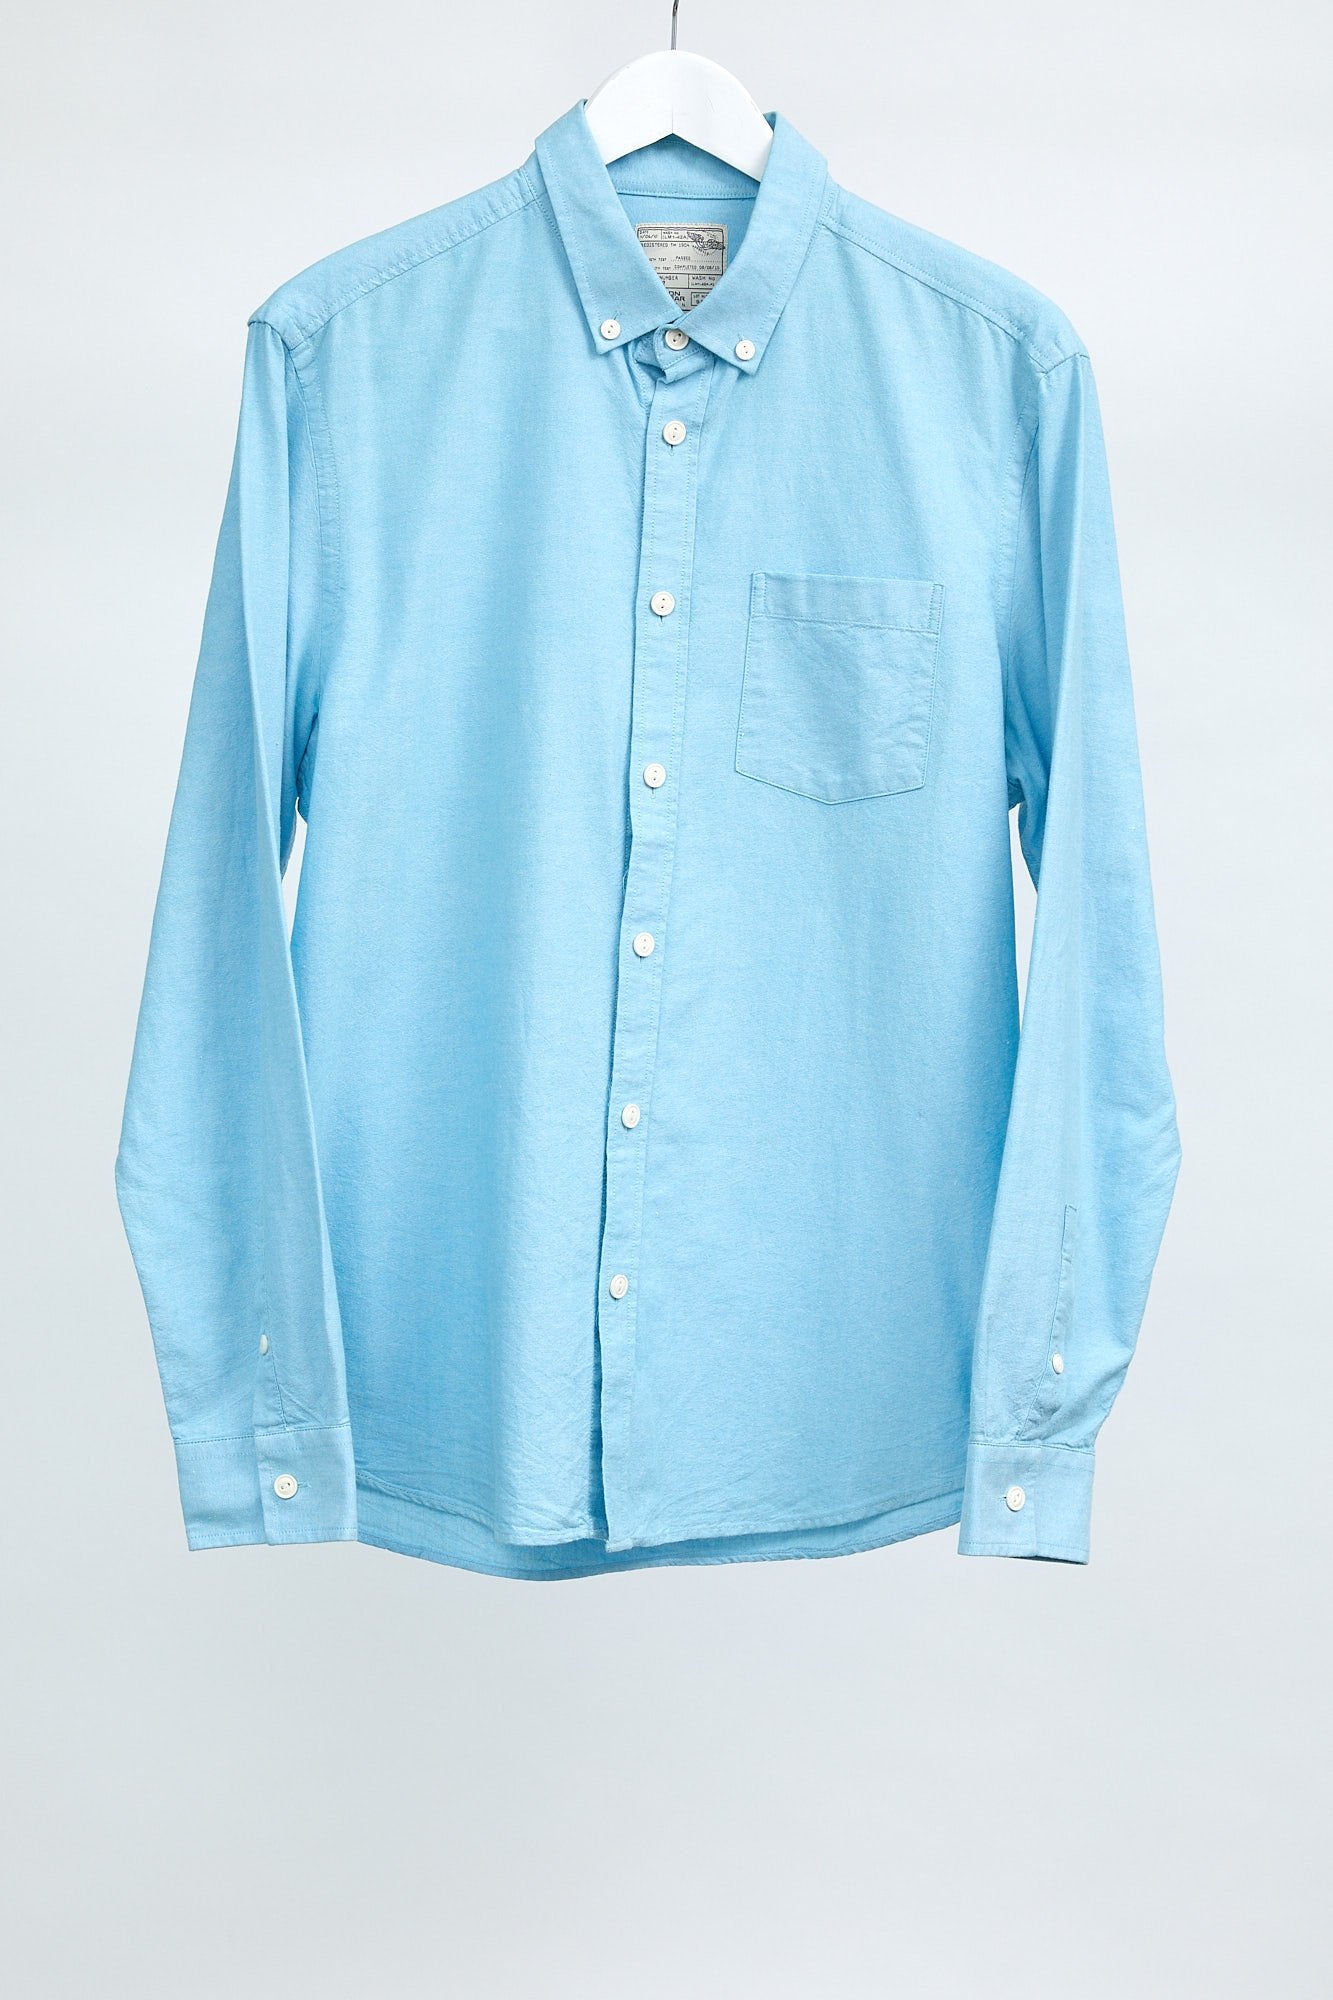 Mens Turquoise Blue Oxford Shirt: Size Medium